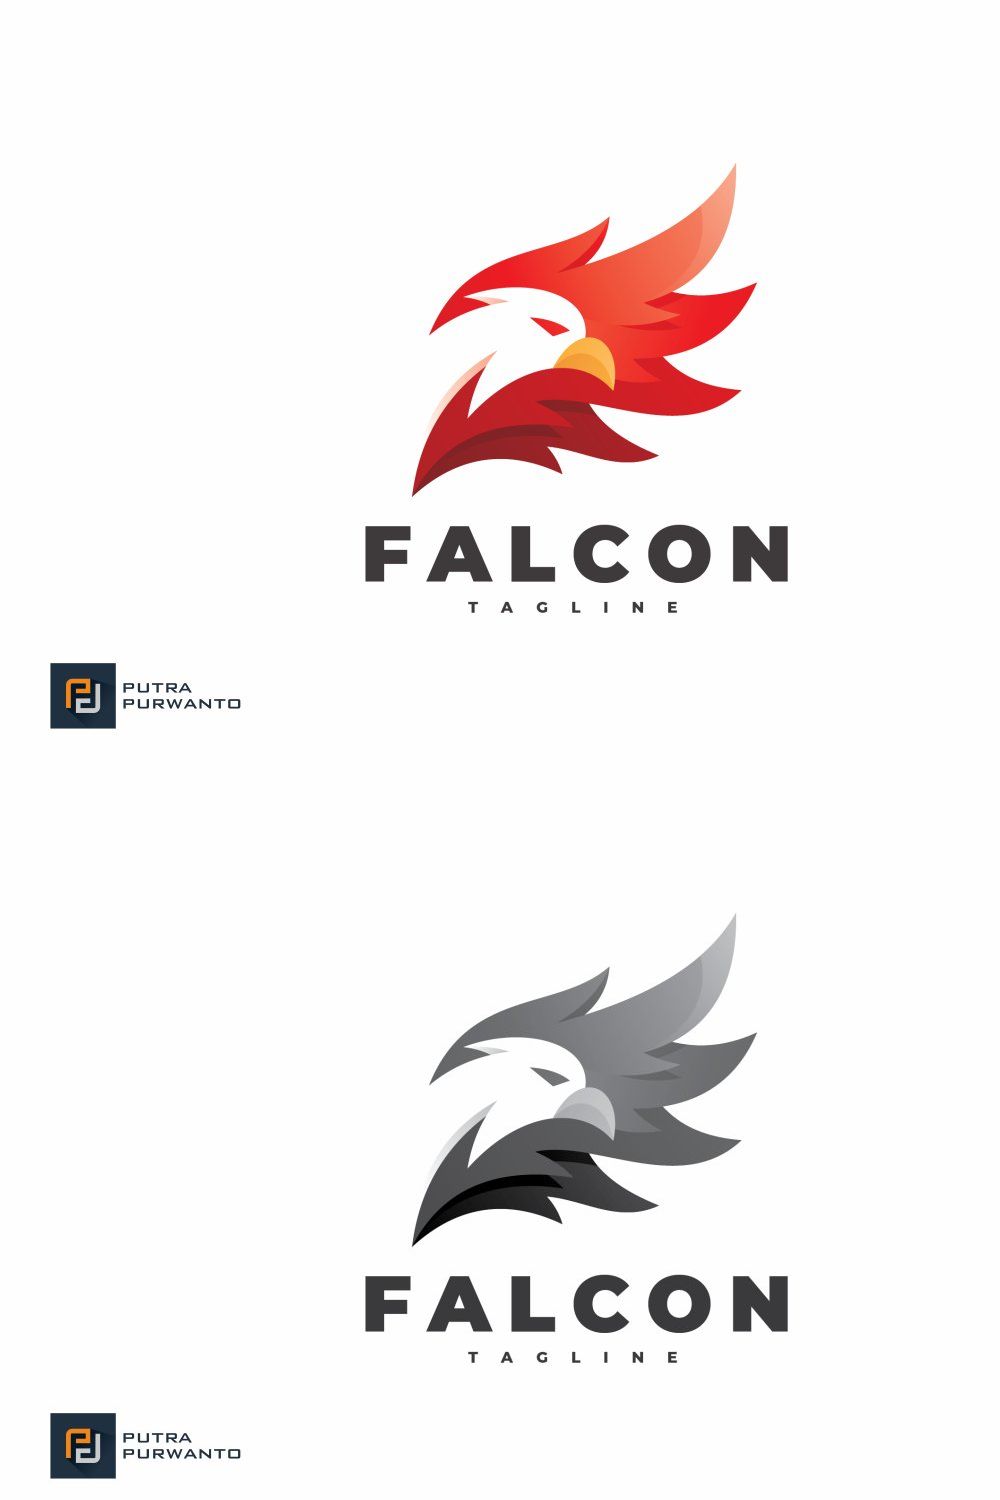 Falcon - Logo Template pinterest preview image.